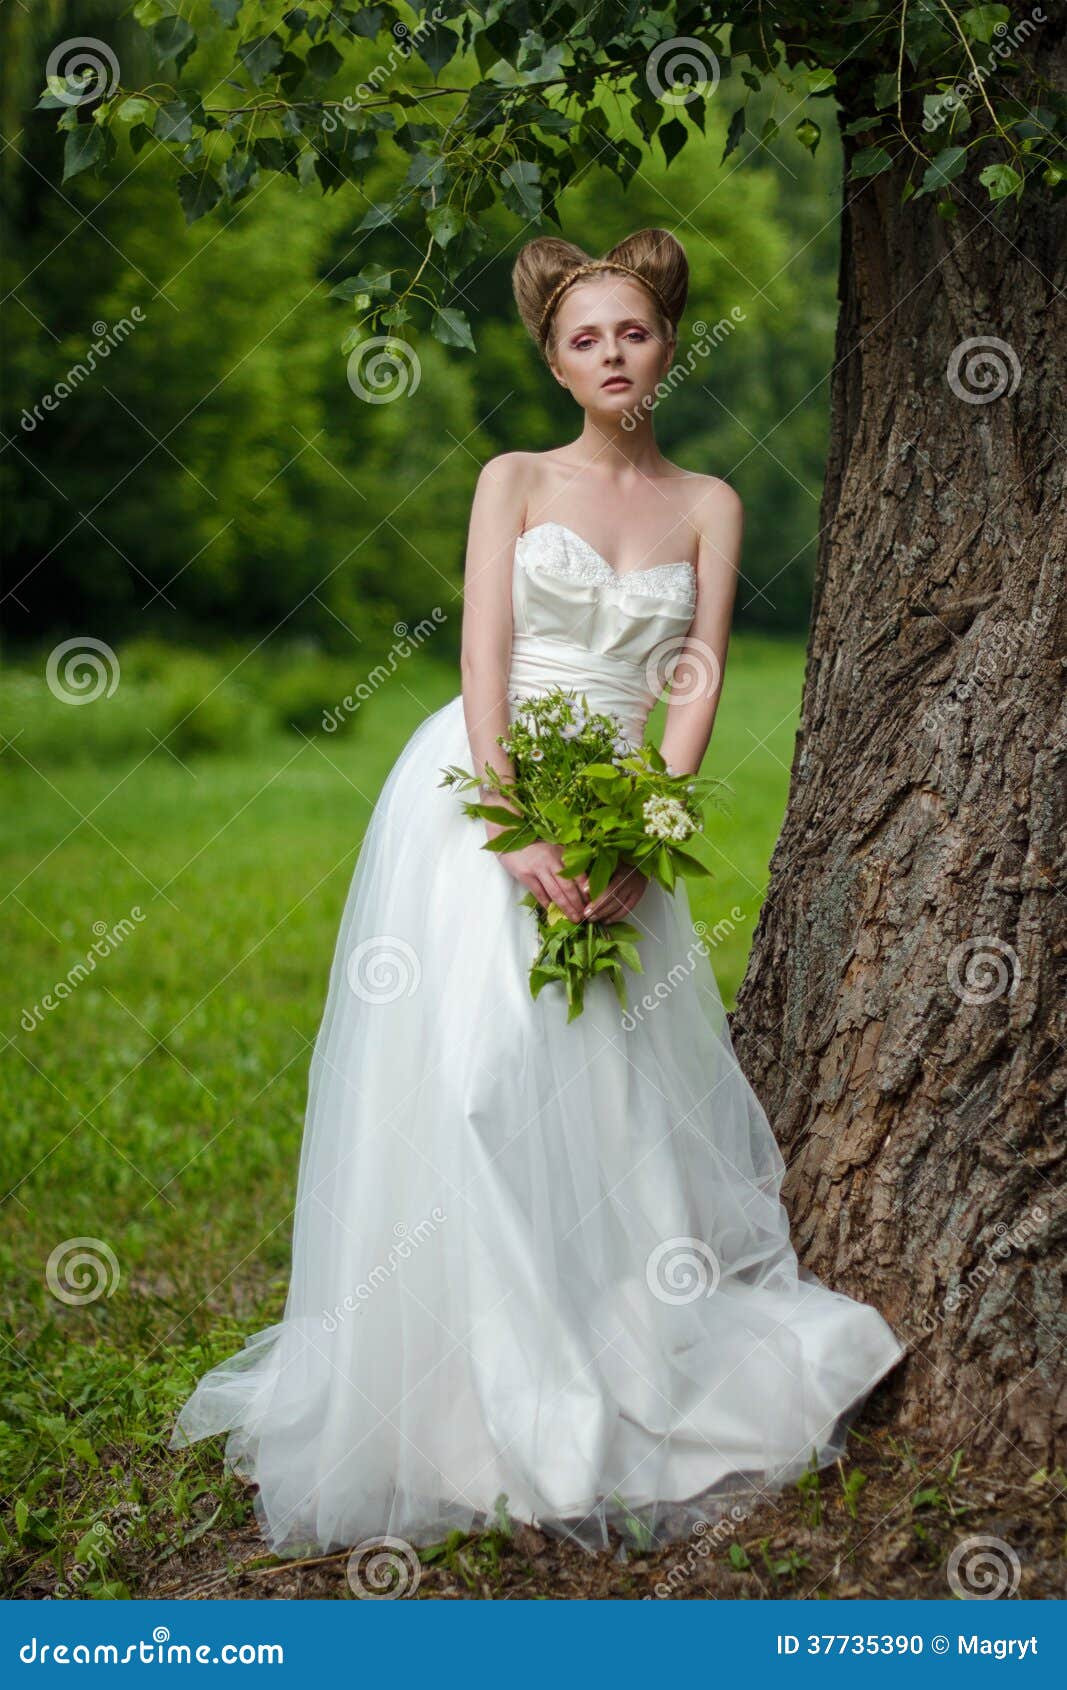 For Beautiful Bride Fashionable Wedding 15